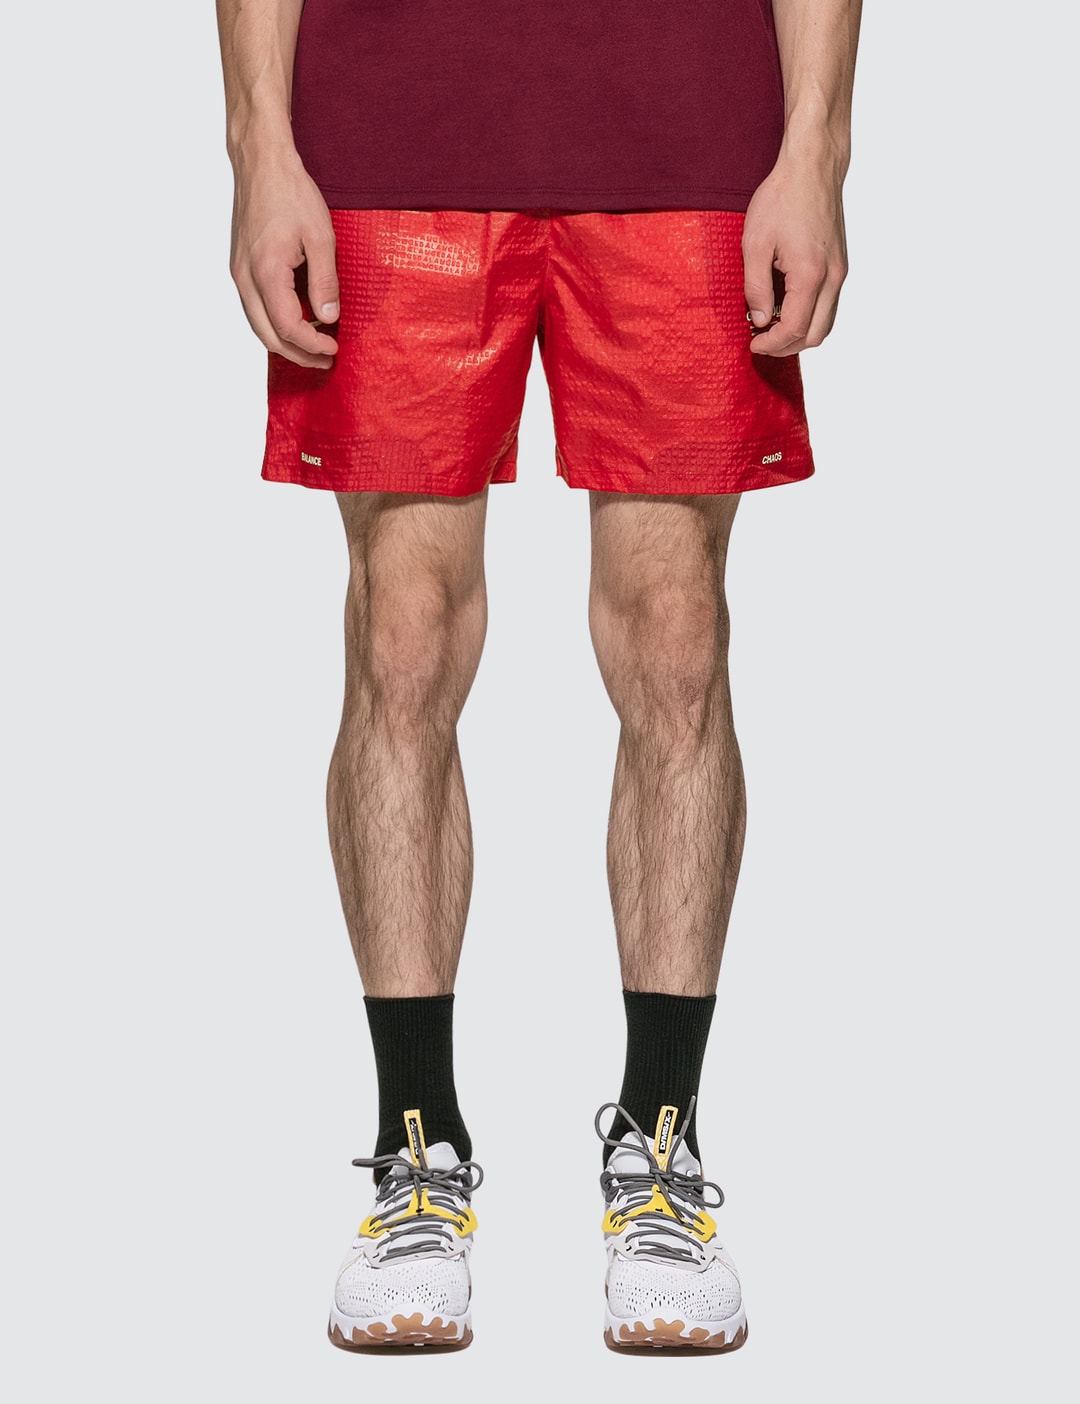 Nike - x Gyakusou Shorts | HBX - Globally Curated Fashion and Lifestyle by Hypebeast